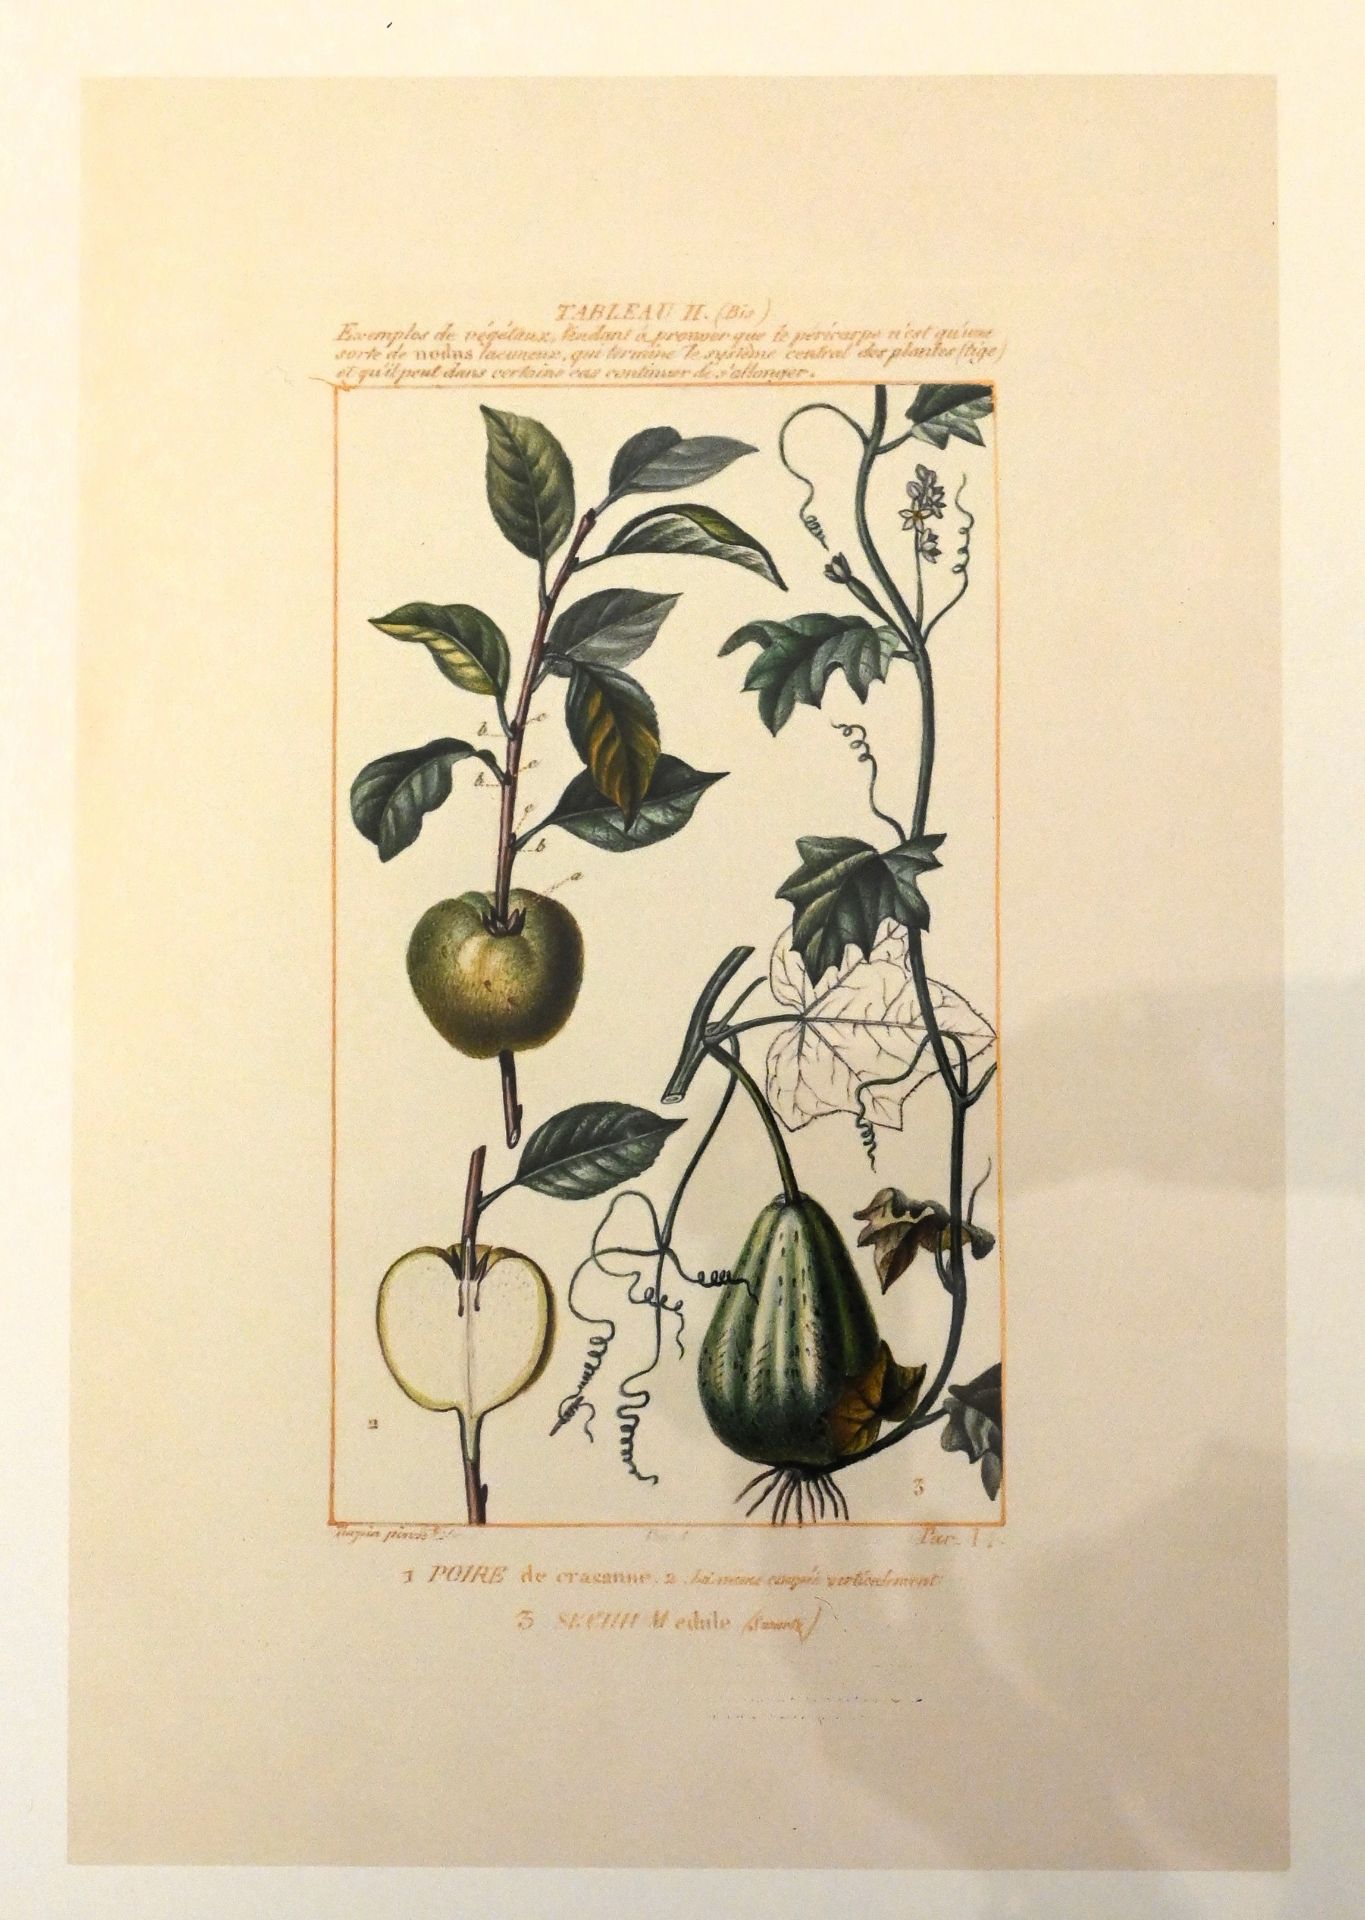 Piere Jean Francois Turpin botanical framed prints - Image 3 of 5